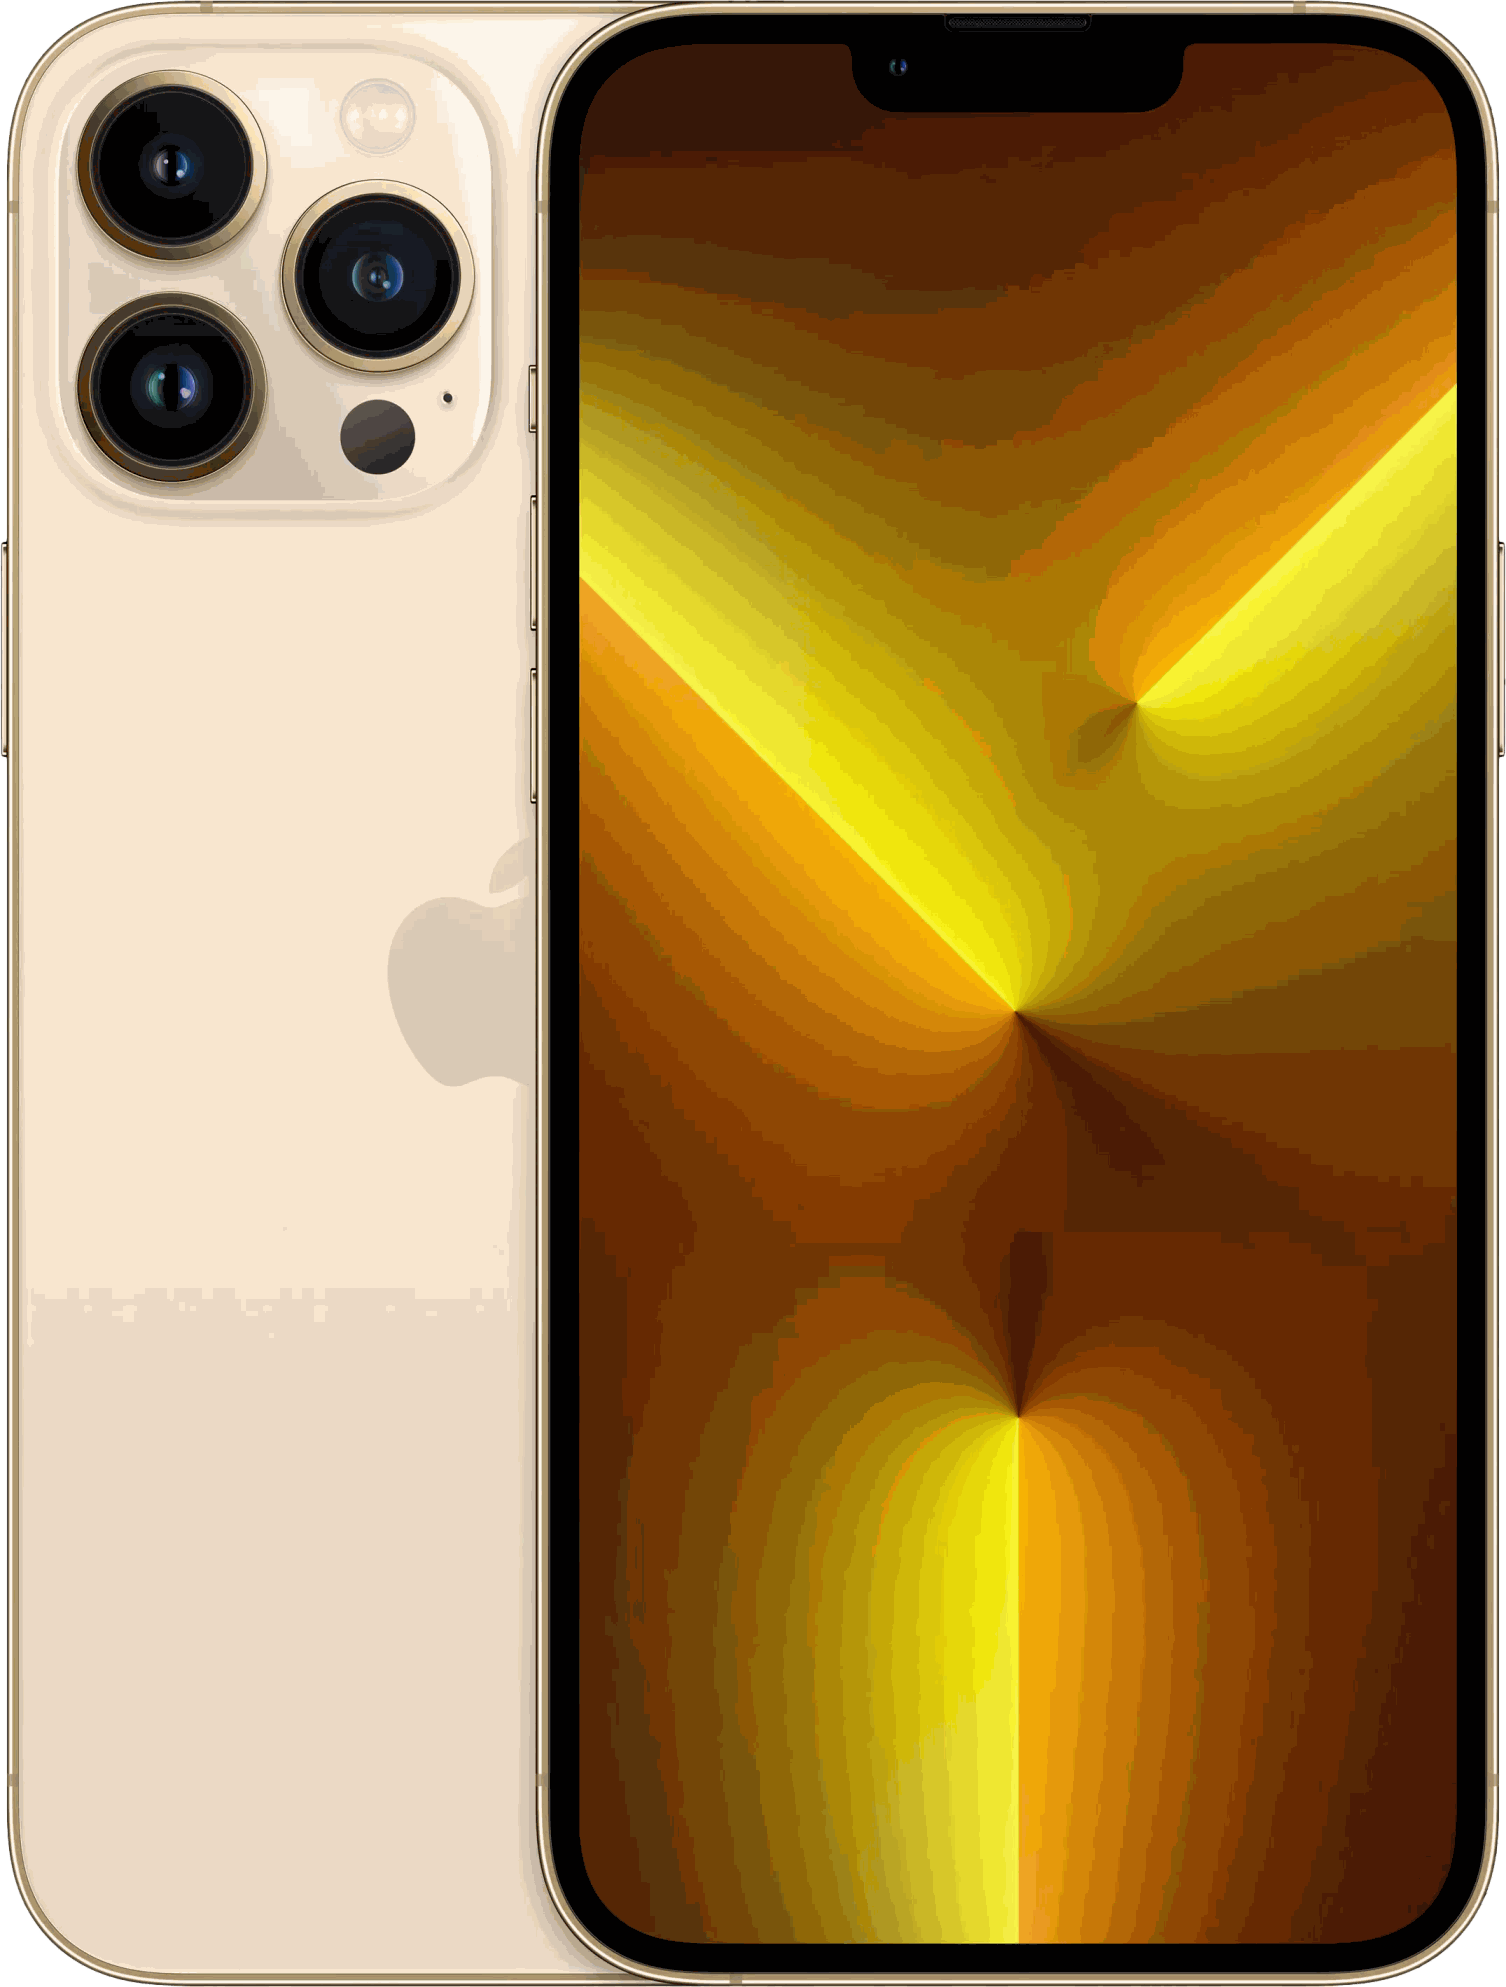 Apple iPhone 13 Pro Max 512Gb Gold